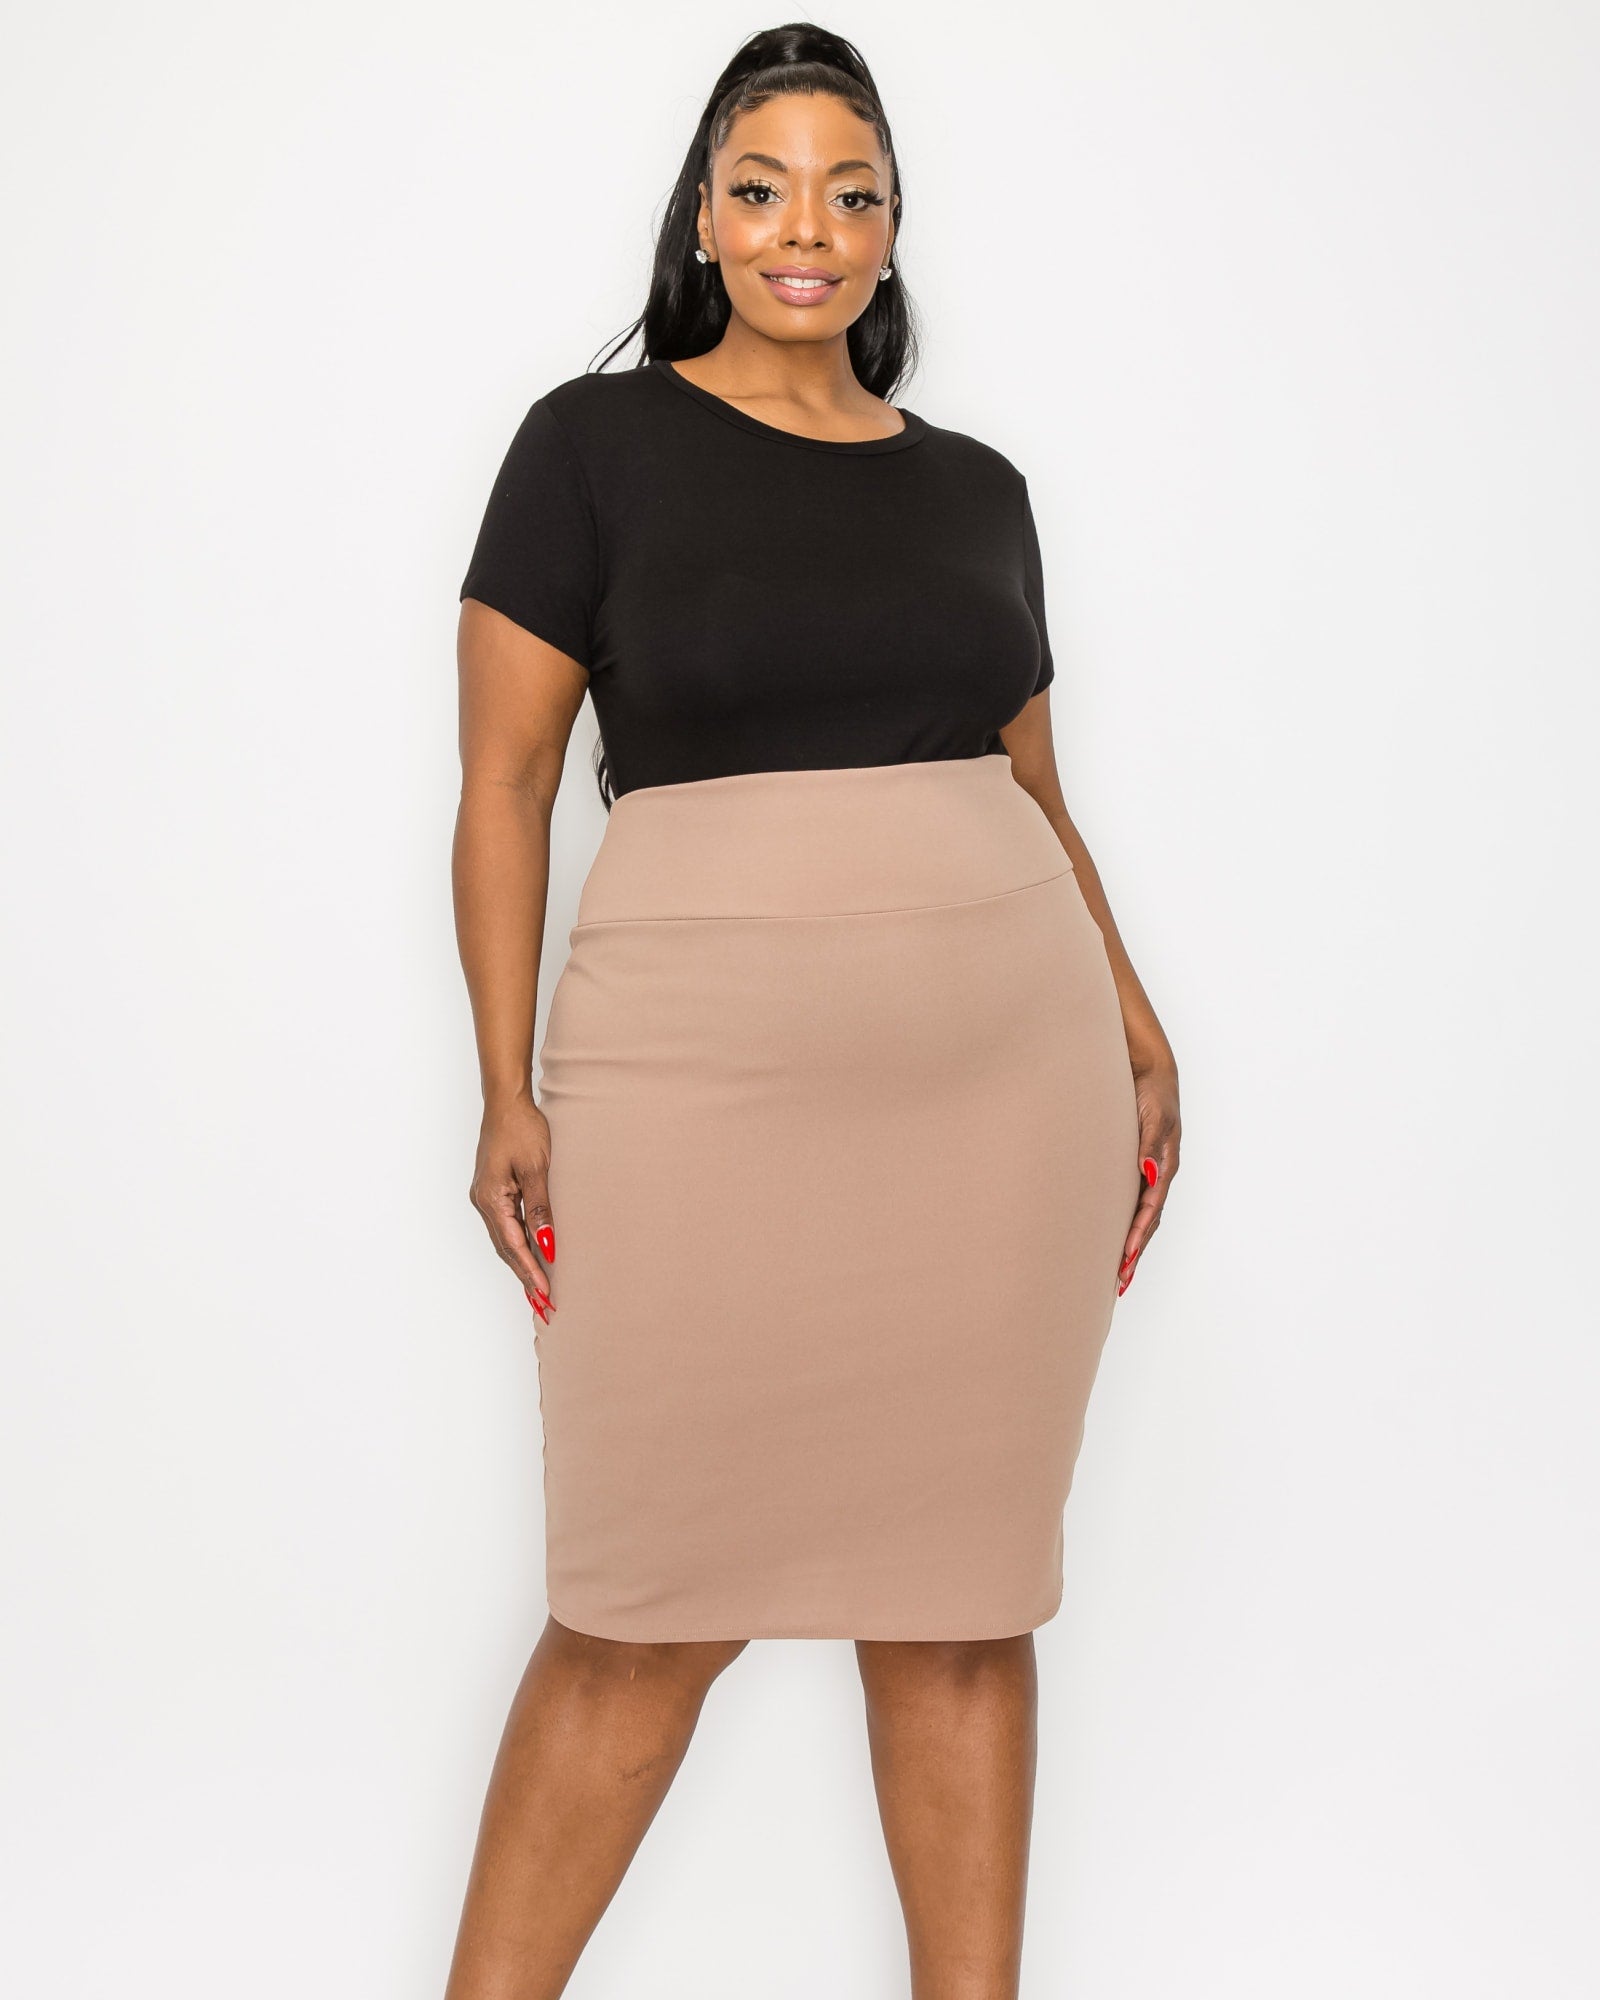 Yasmin Plus Size Maxi Skirt with Smocked Drawstring Waistband